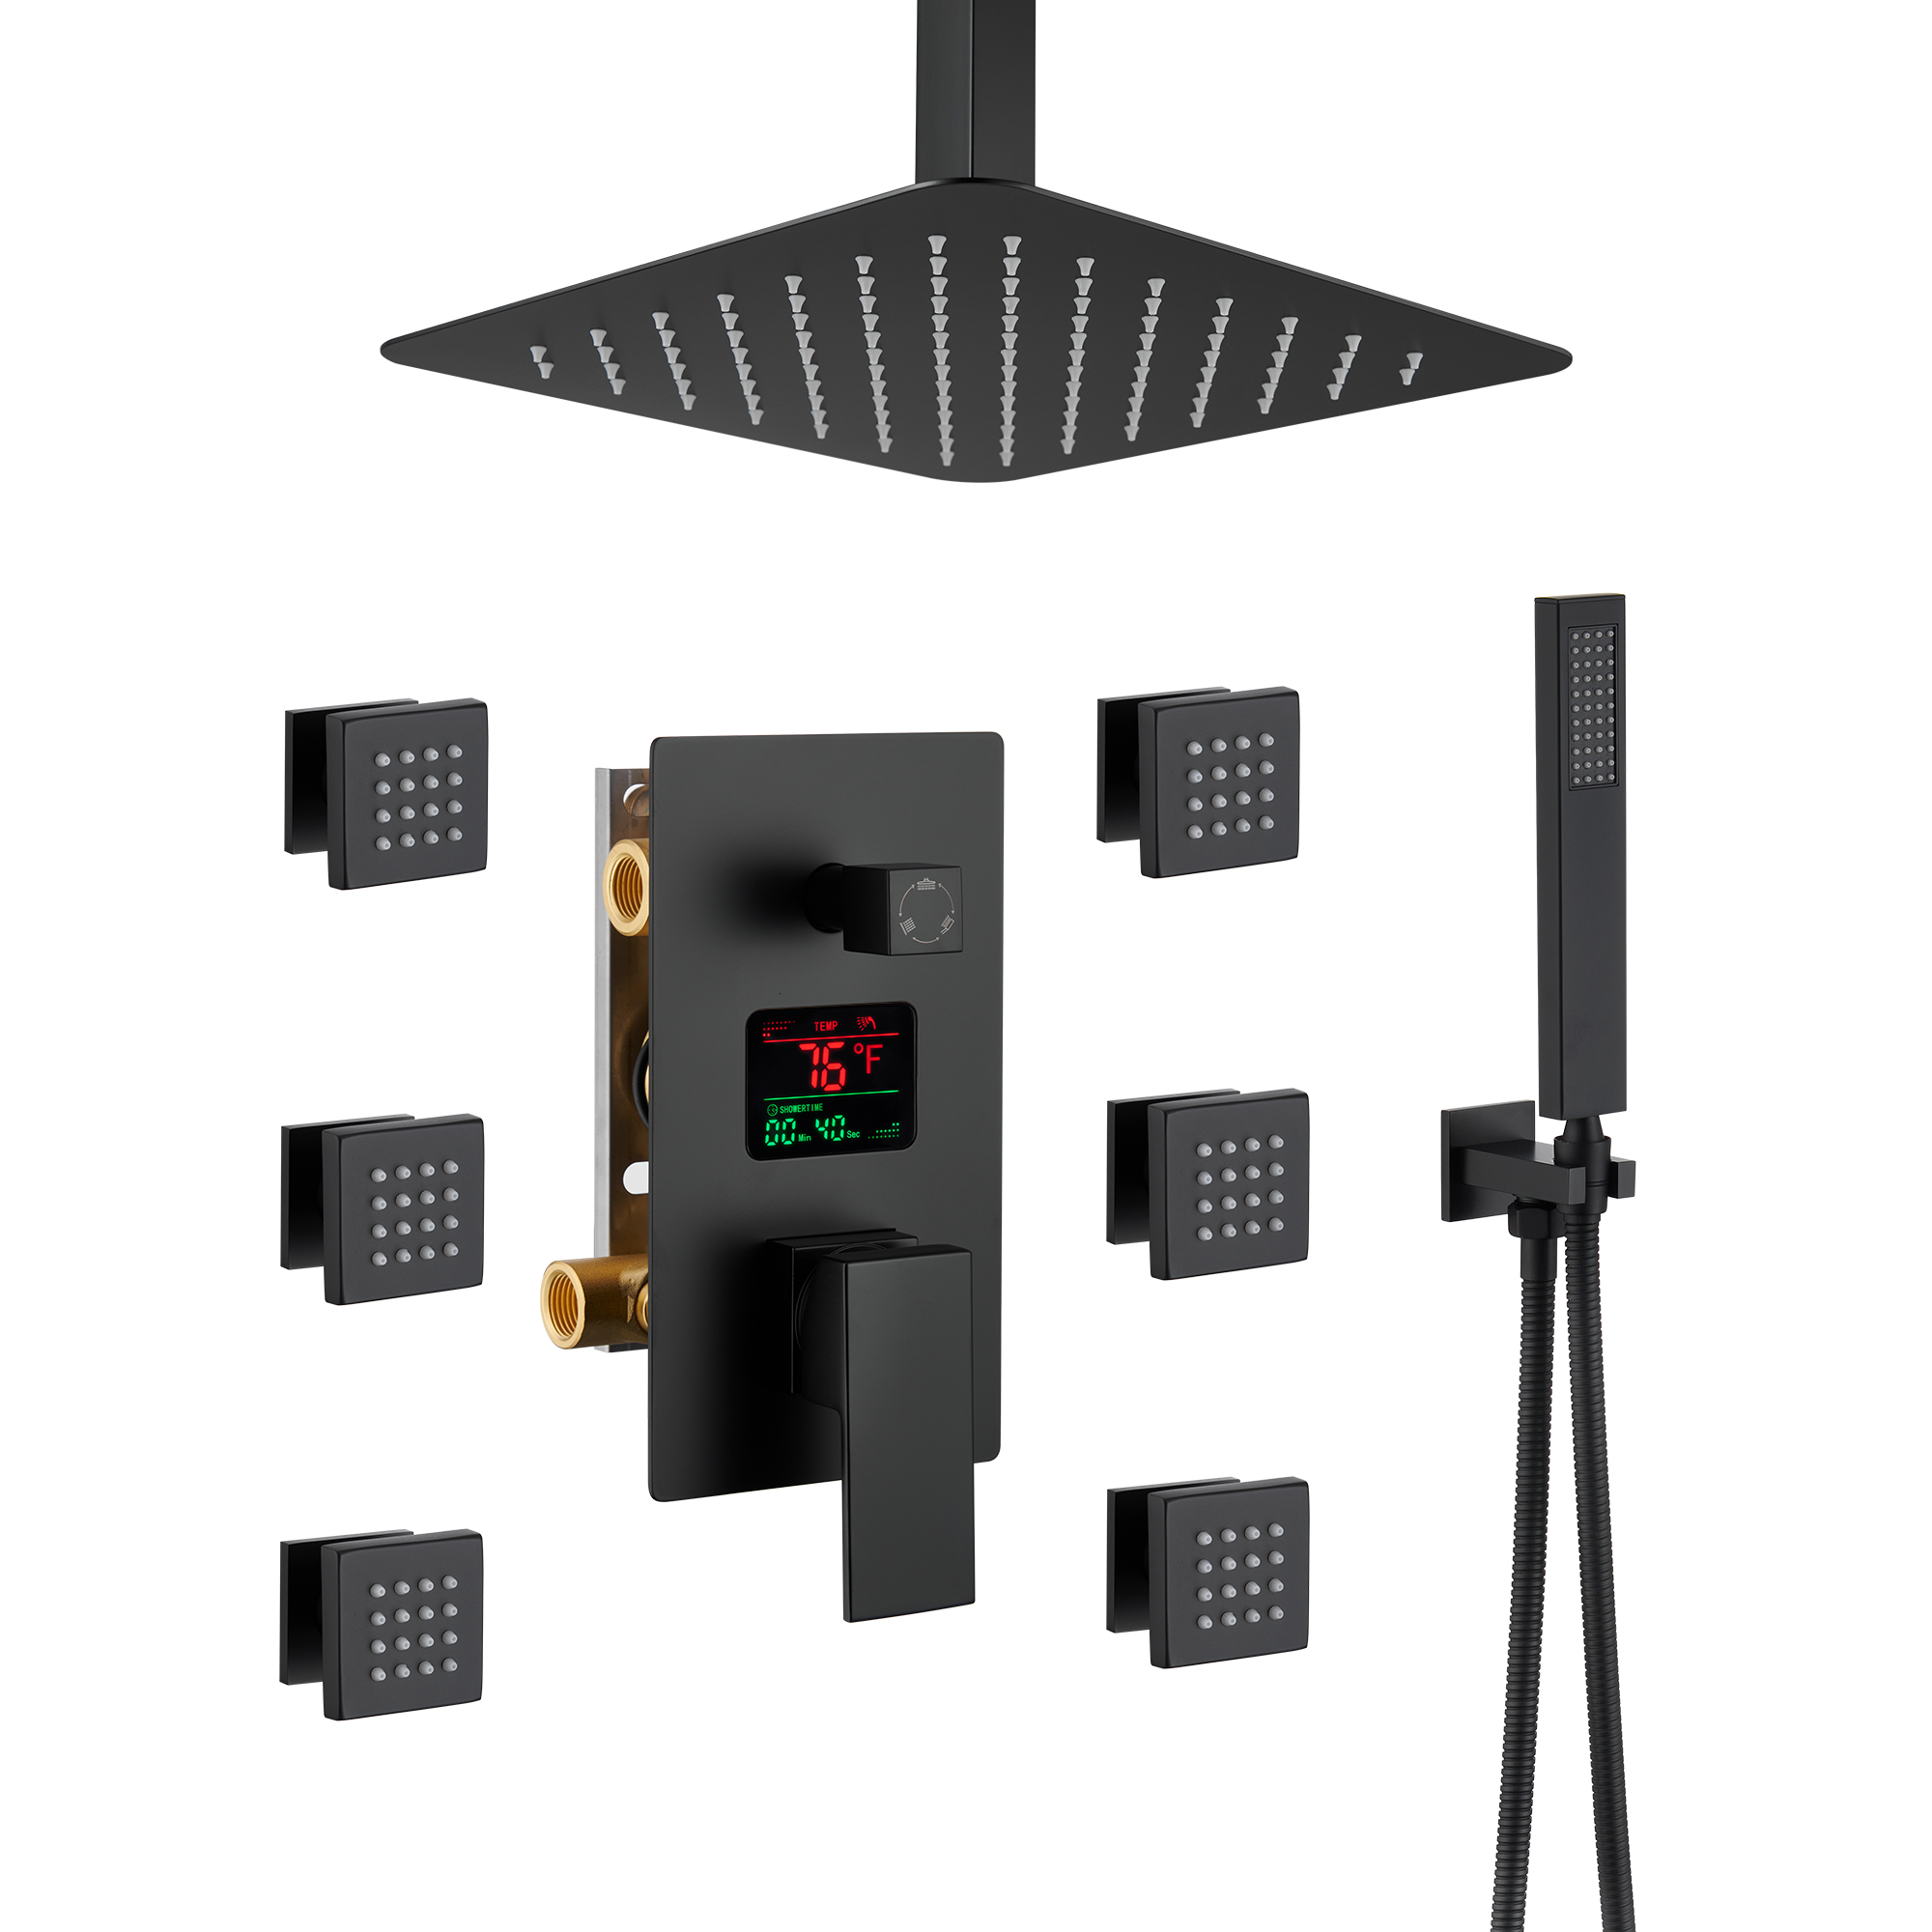 BLACK-Mondawe Ceiling Mount Pressure Balanced Rain Shower System with Handheld Shower, Wall Body Jets and Digital Display-Mondawe